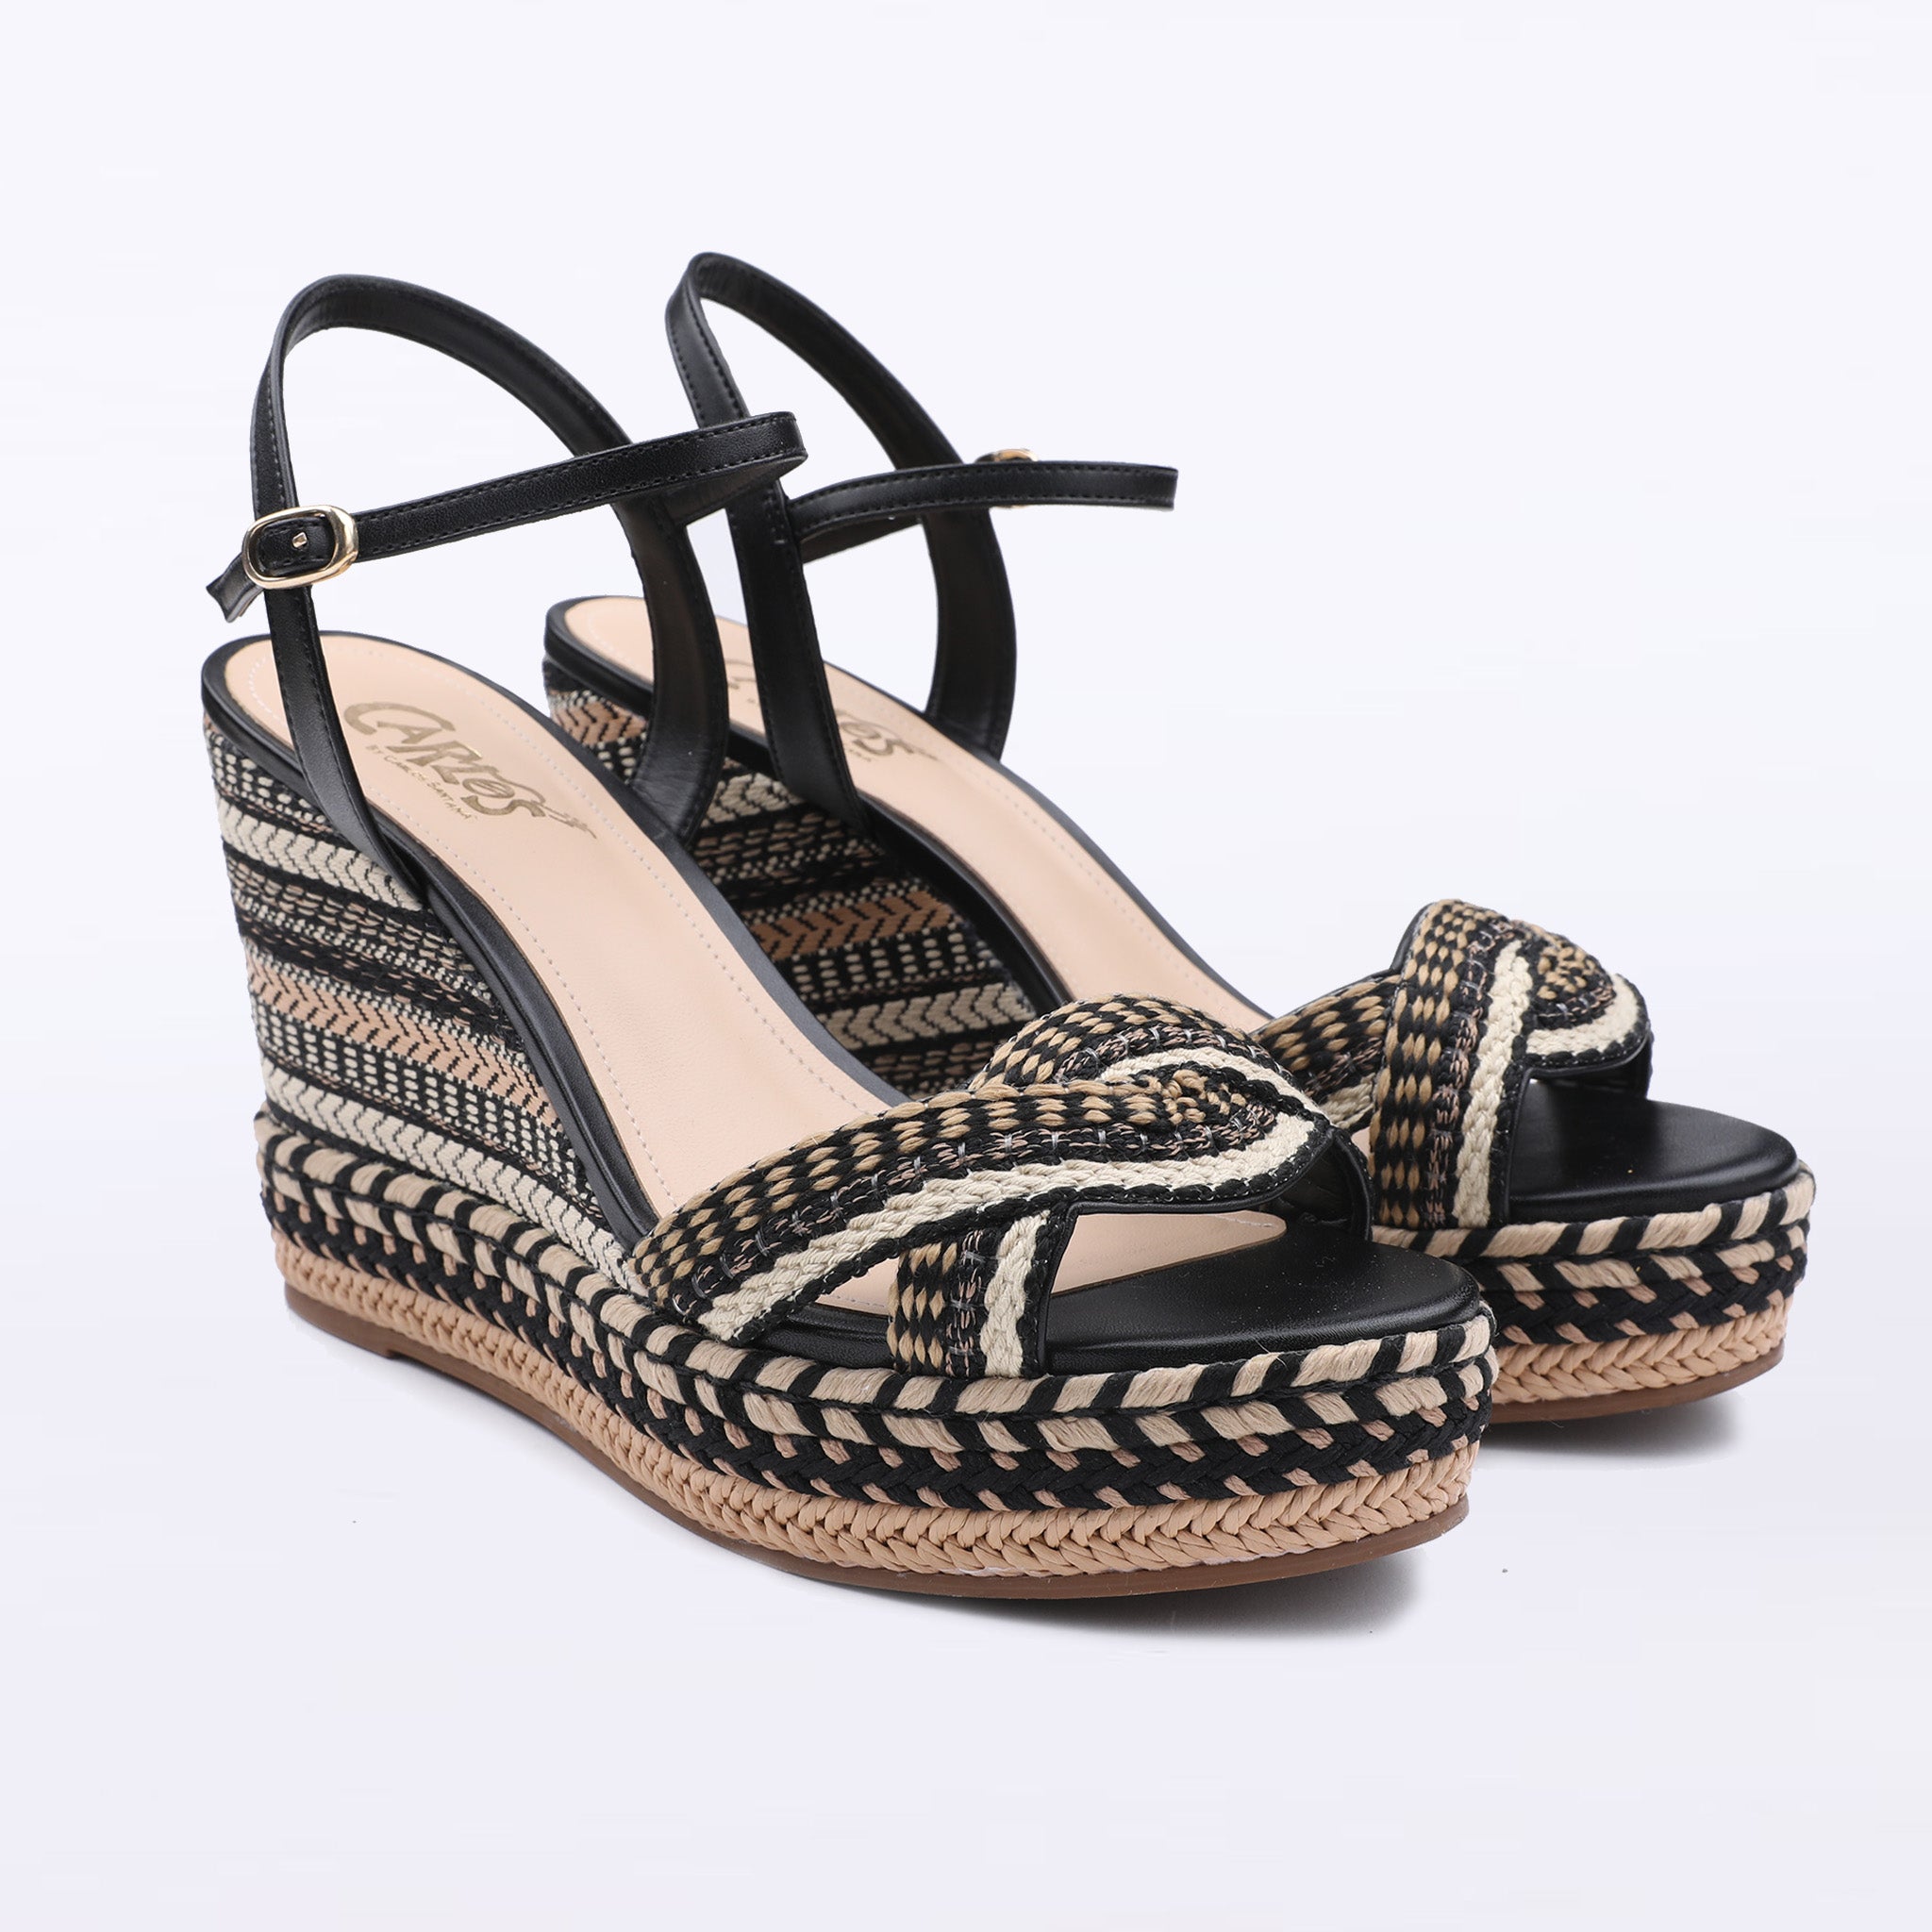 Buy Black Heeled Sandals for Women by T.ELEVEN Online | Ajio.com